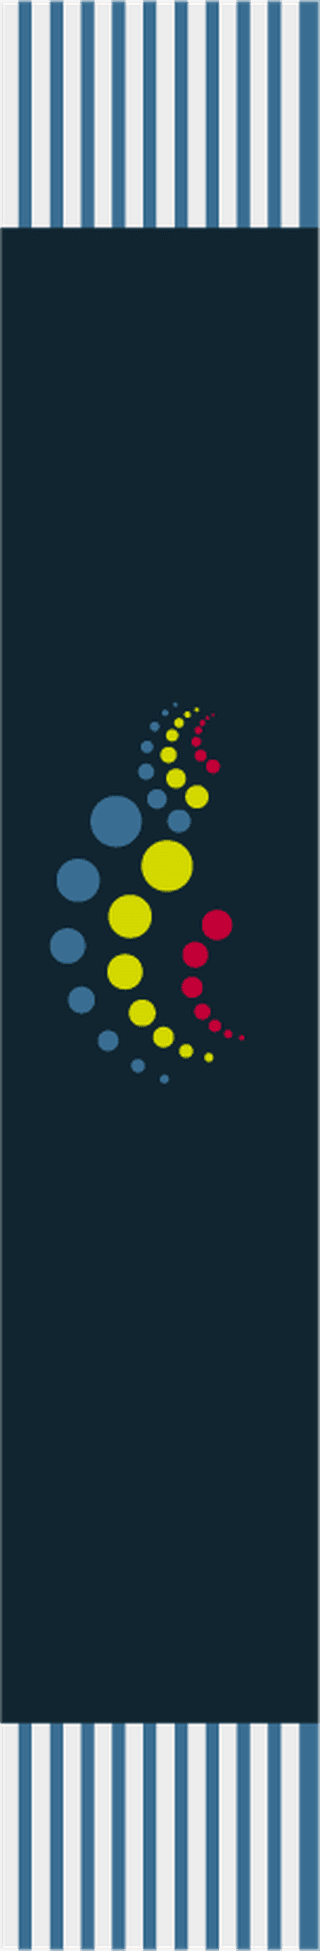 corporateidentity-collection-dark-blue-design-circles-logotype-742029